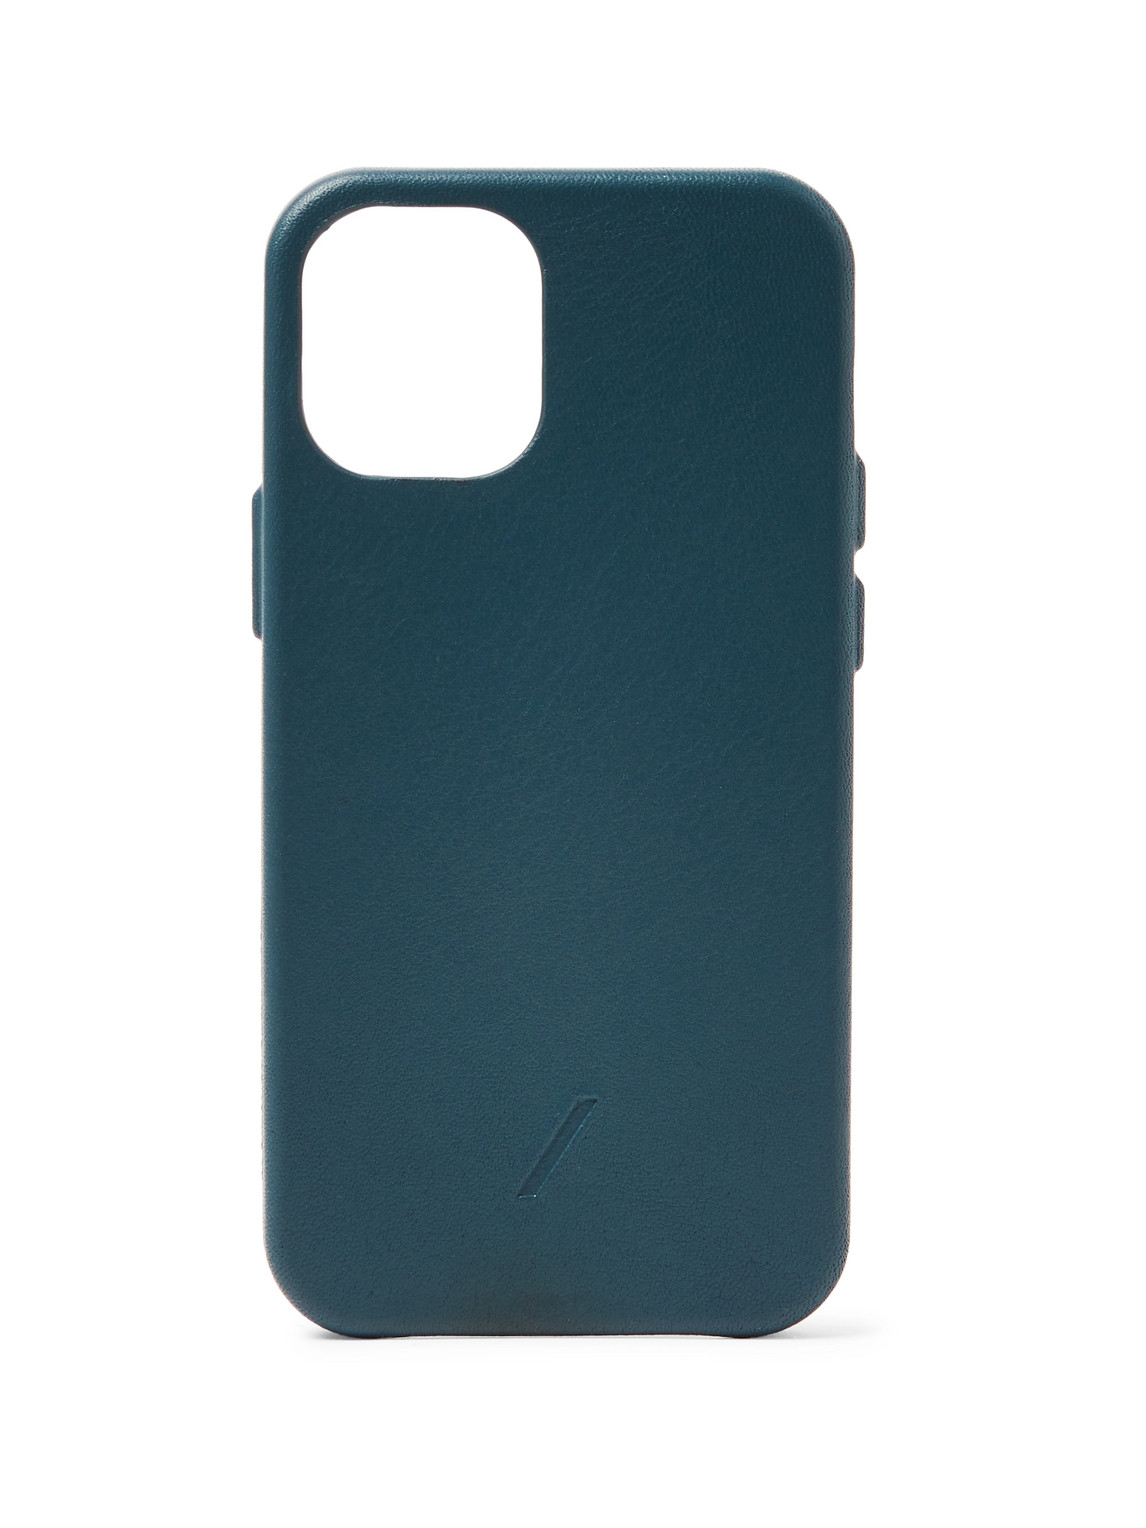 Clic Classic Leather iPhone 12 Mini Case